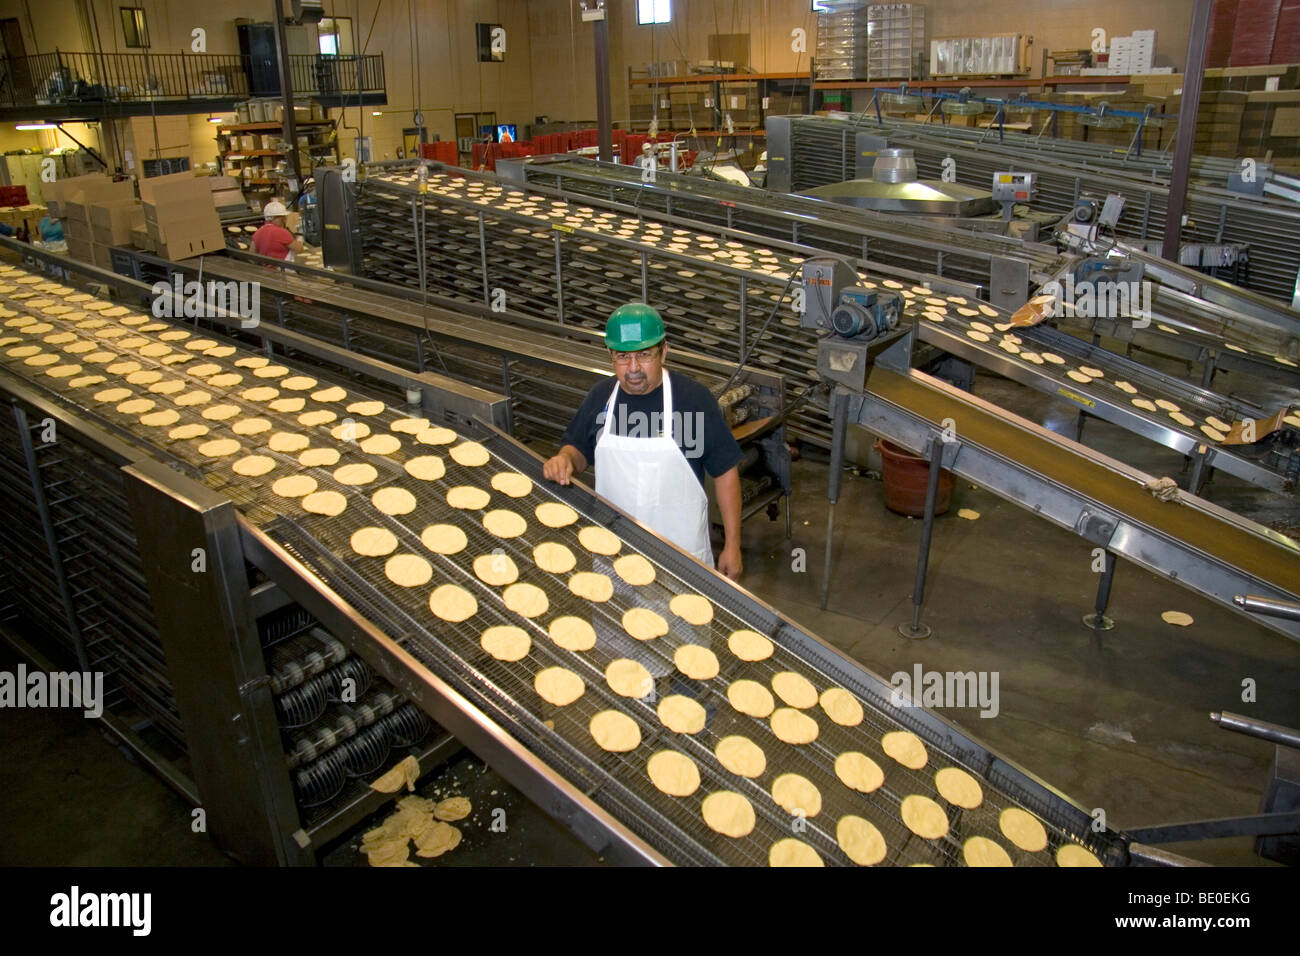 Corn tortilla processing factory located in Caldwell, Idaho, USA.  Stock Photo